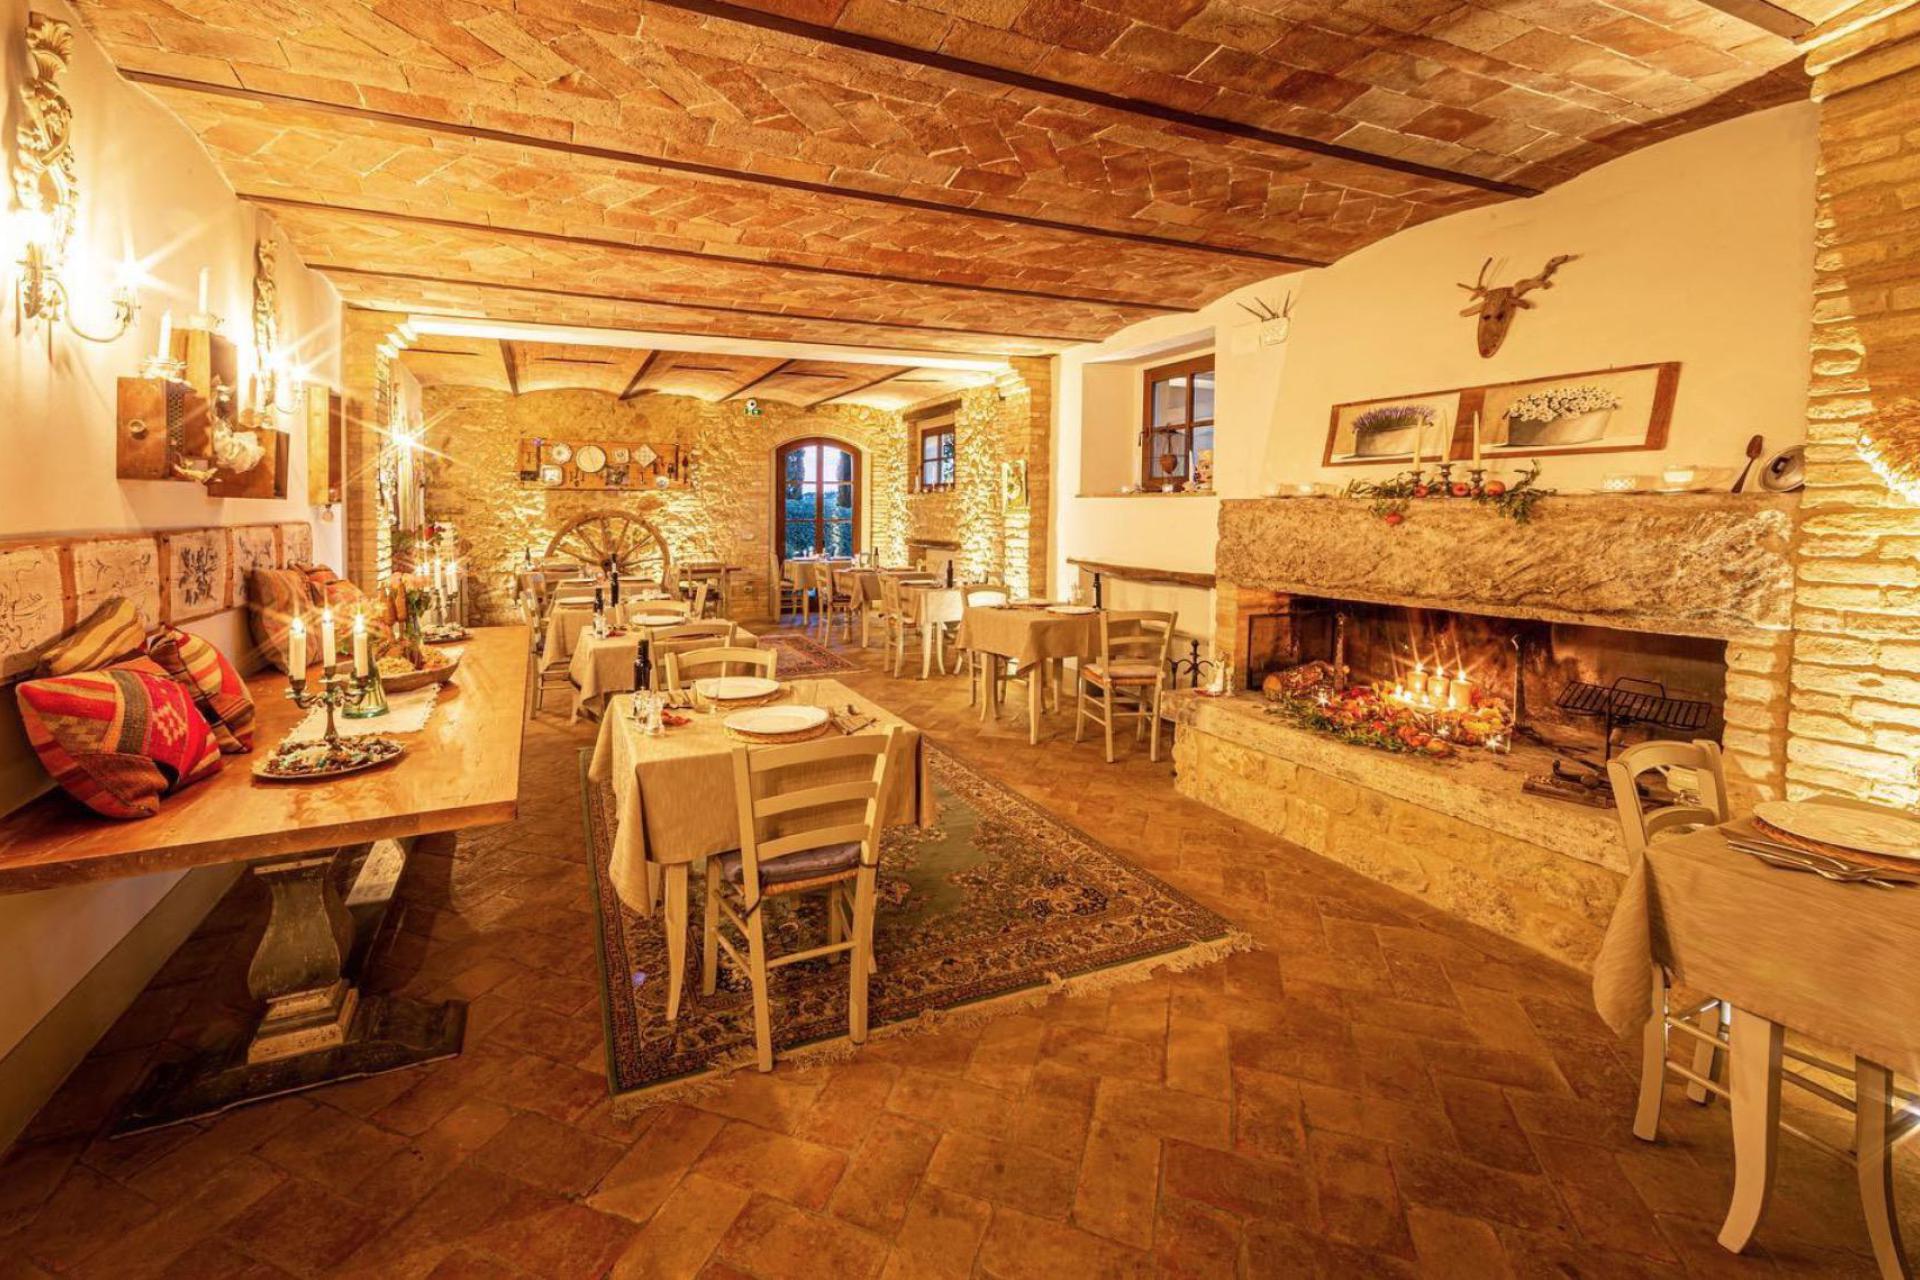 Agriturismo Toskana Agriturismo mit Restaurant - Nähe San Gimignano | myitalyselection.de